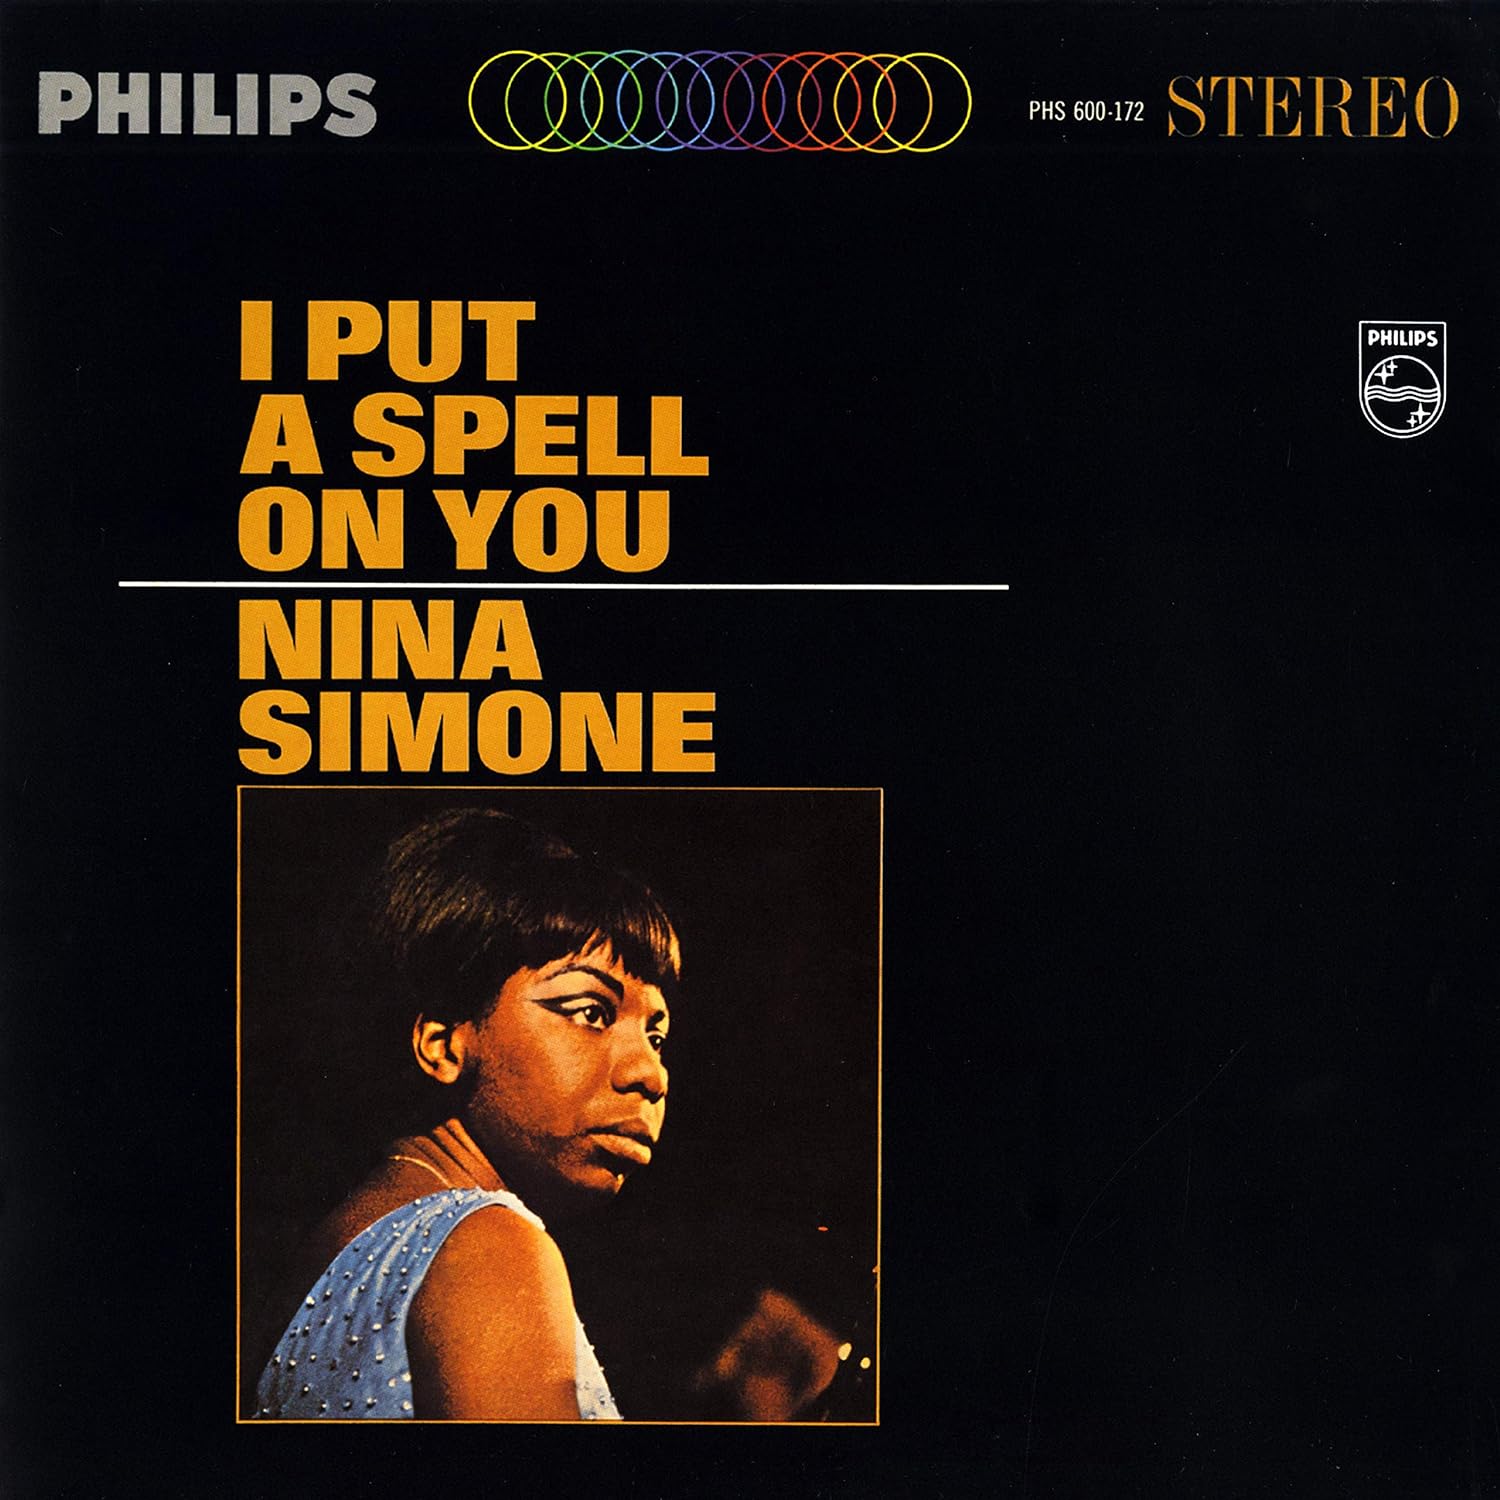 Nina Simone - I Put A Spell On You Vinyl